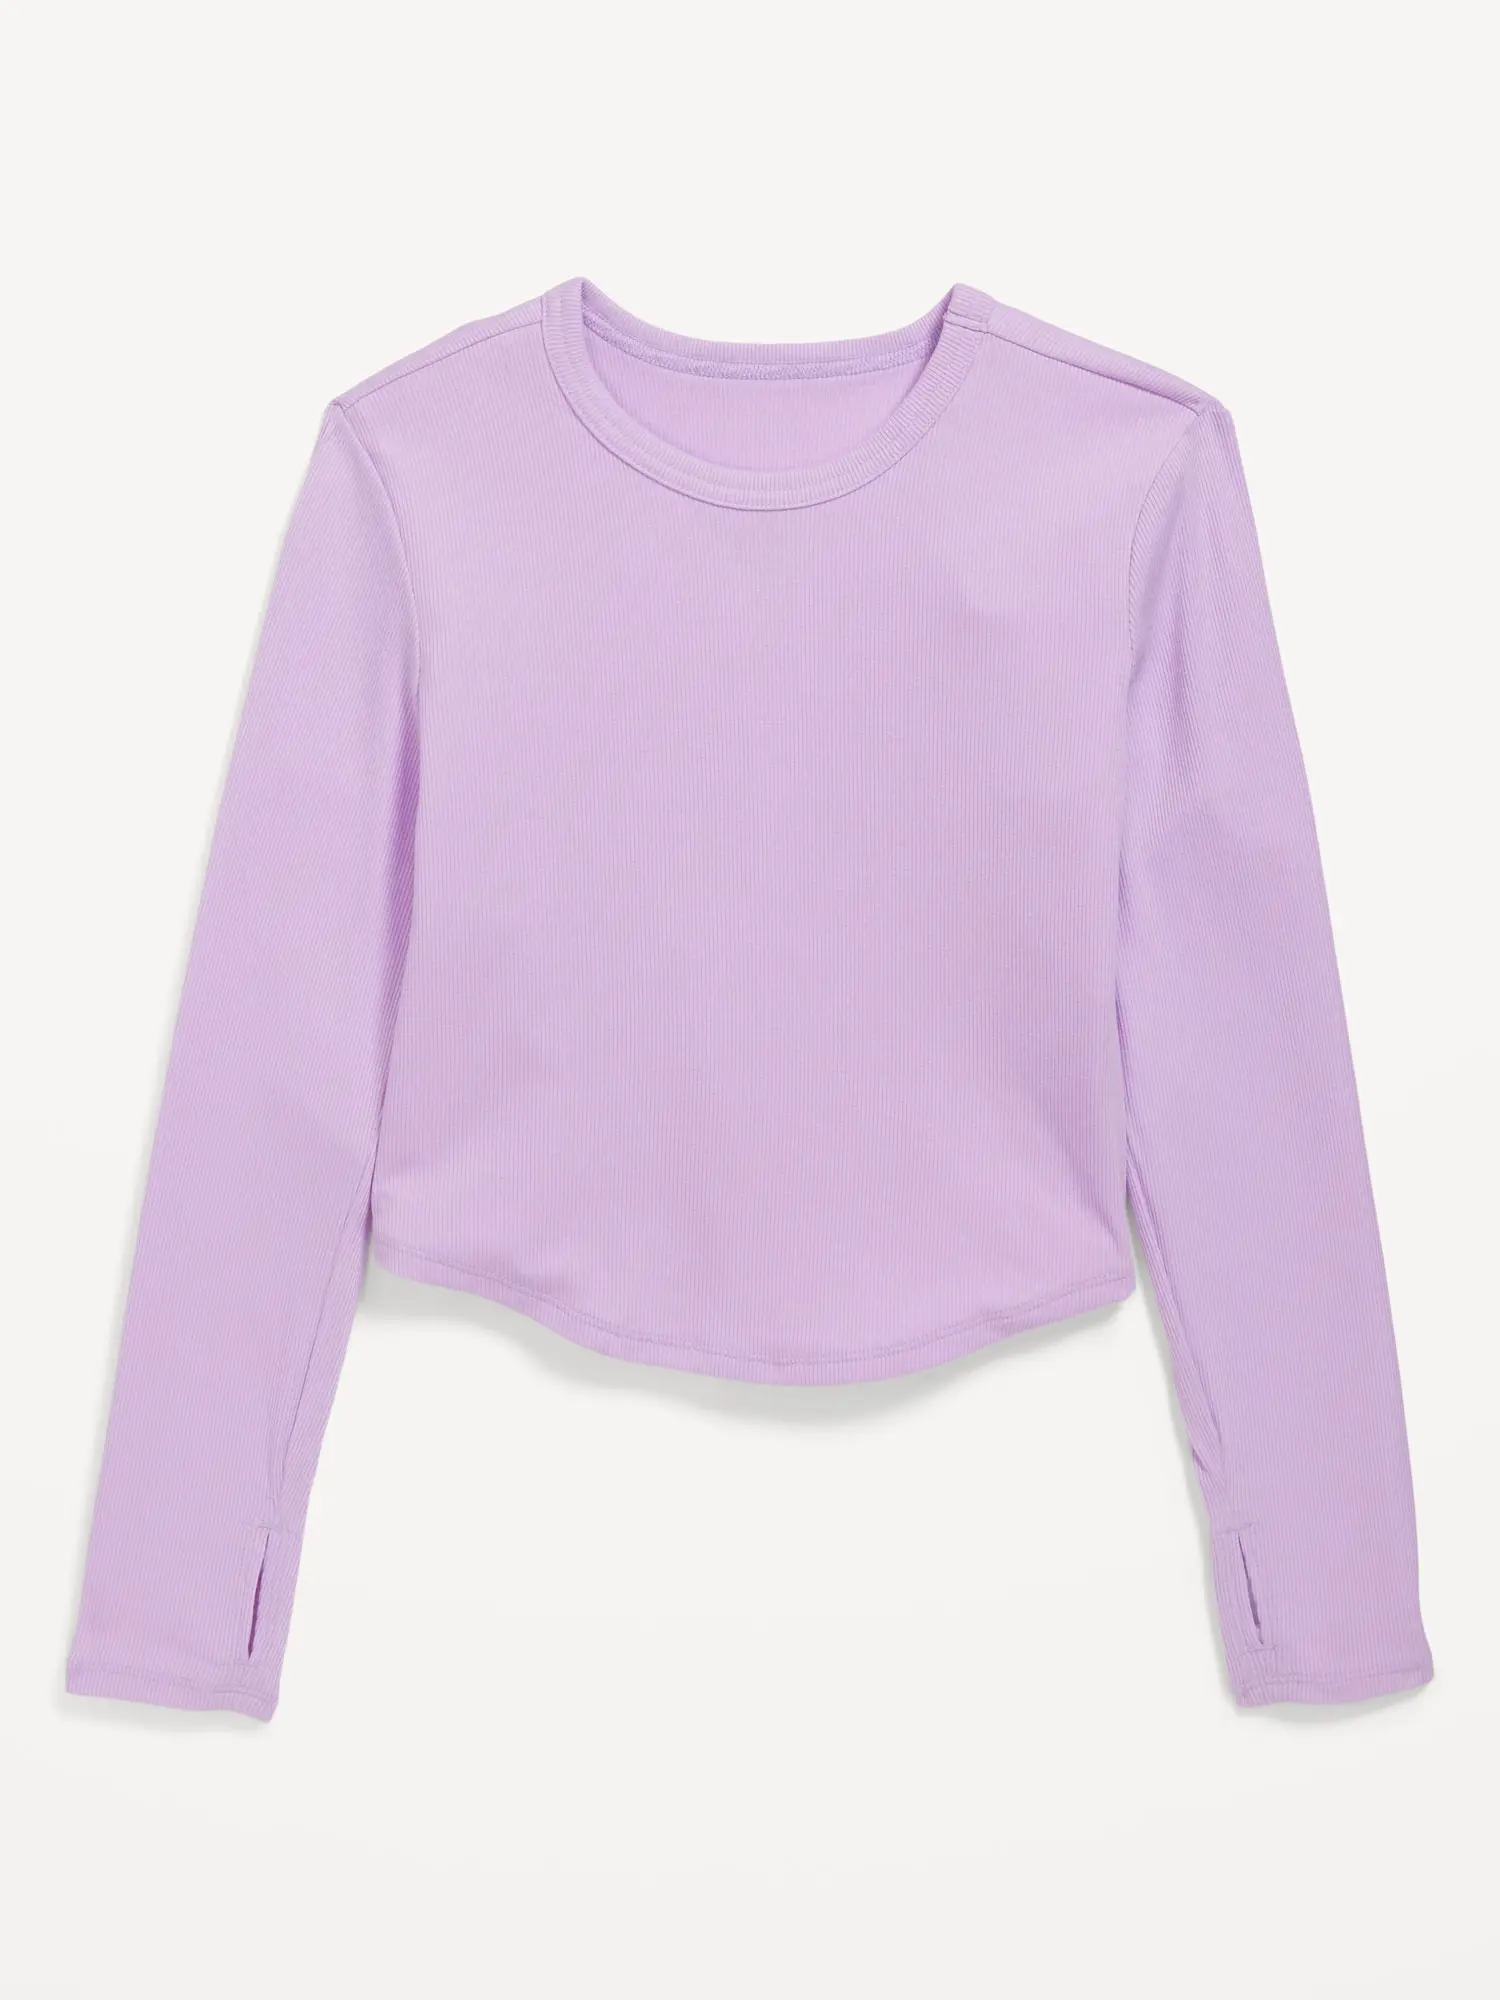 Old Navy UltraLite Long-Sleeve Rib-Knit T-Shirt for Girls purple. 1